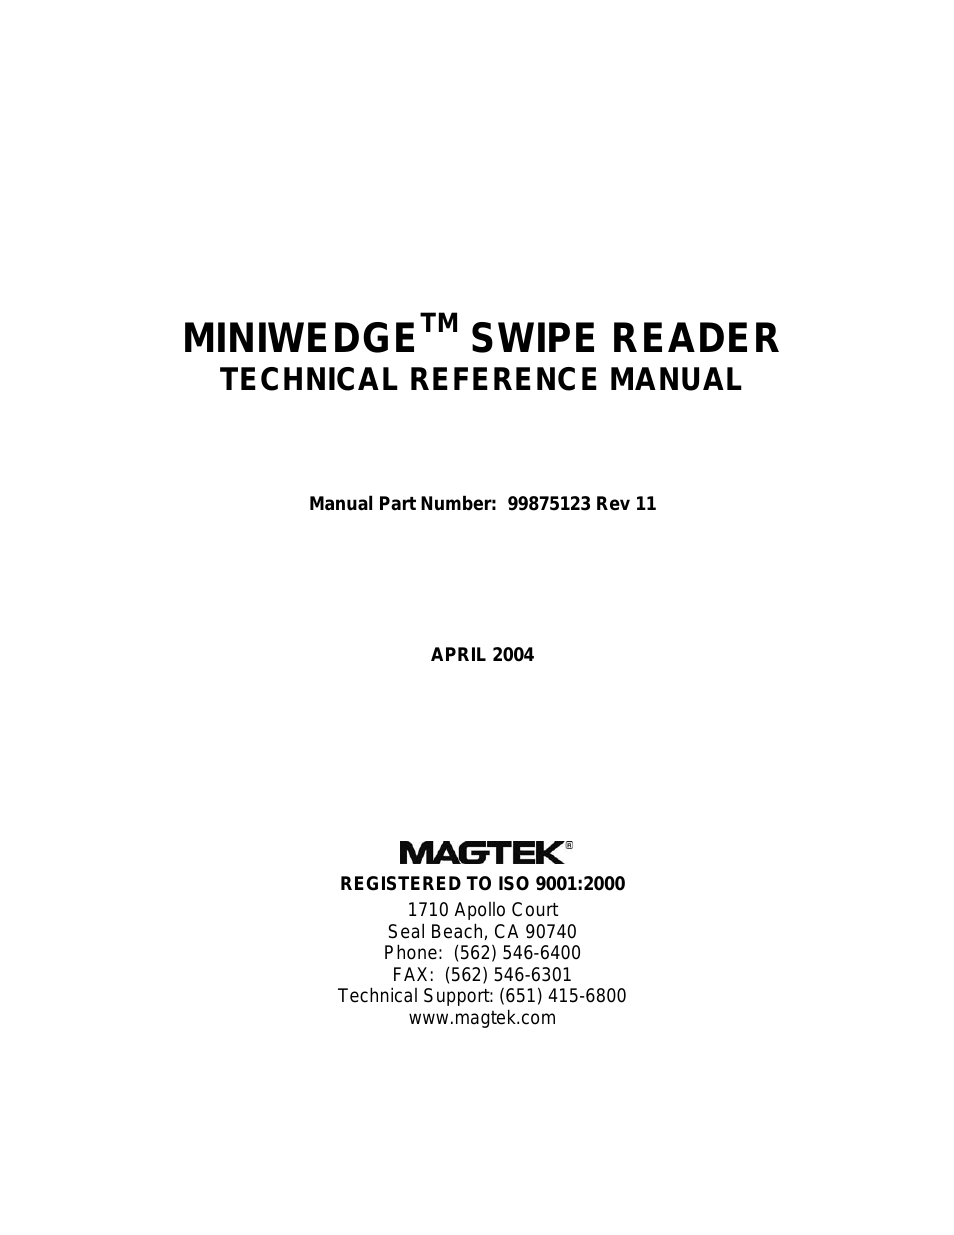 MINIWEDGE SWIPE READER